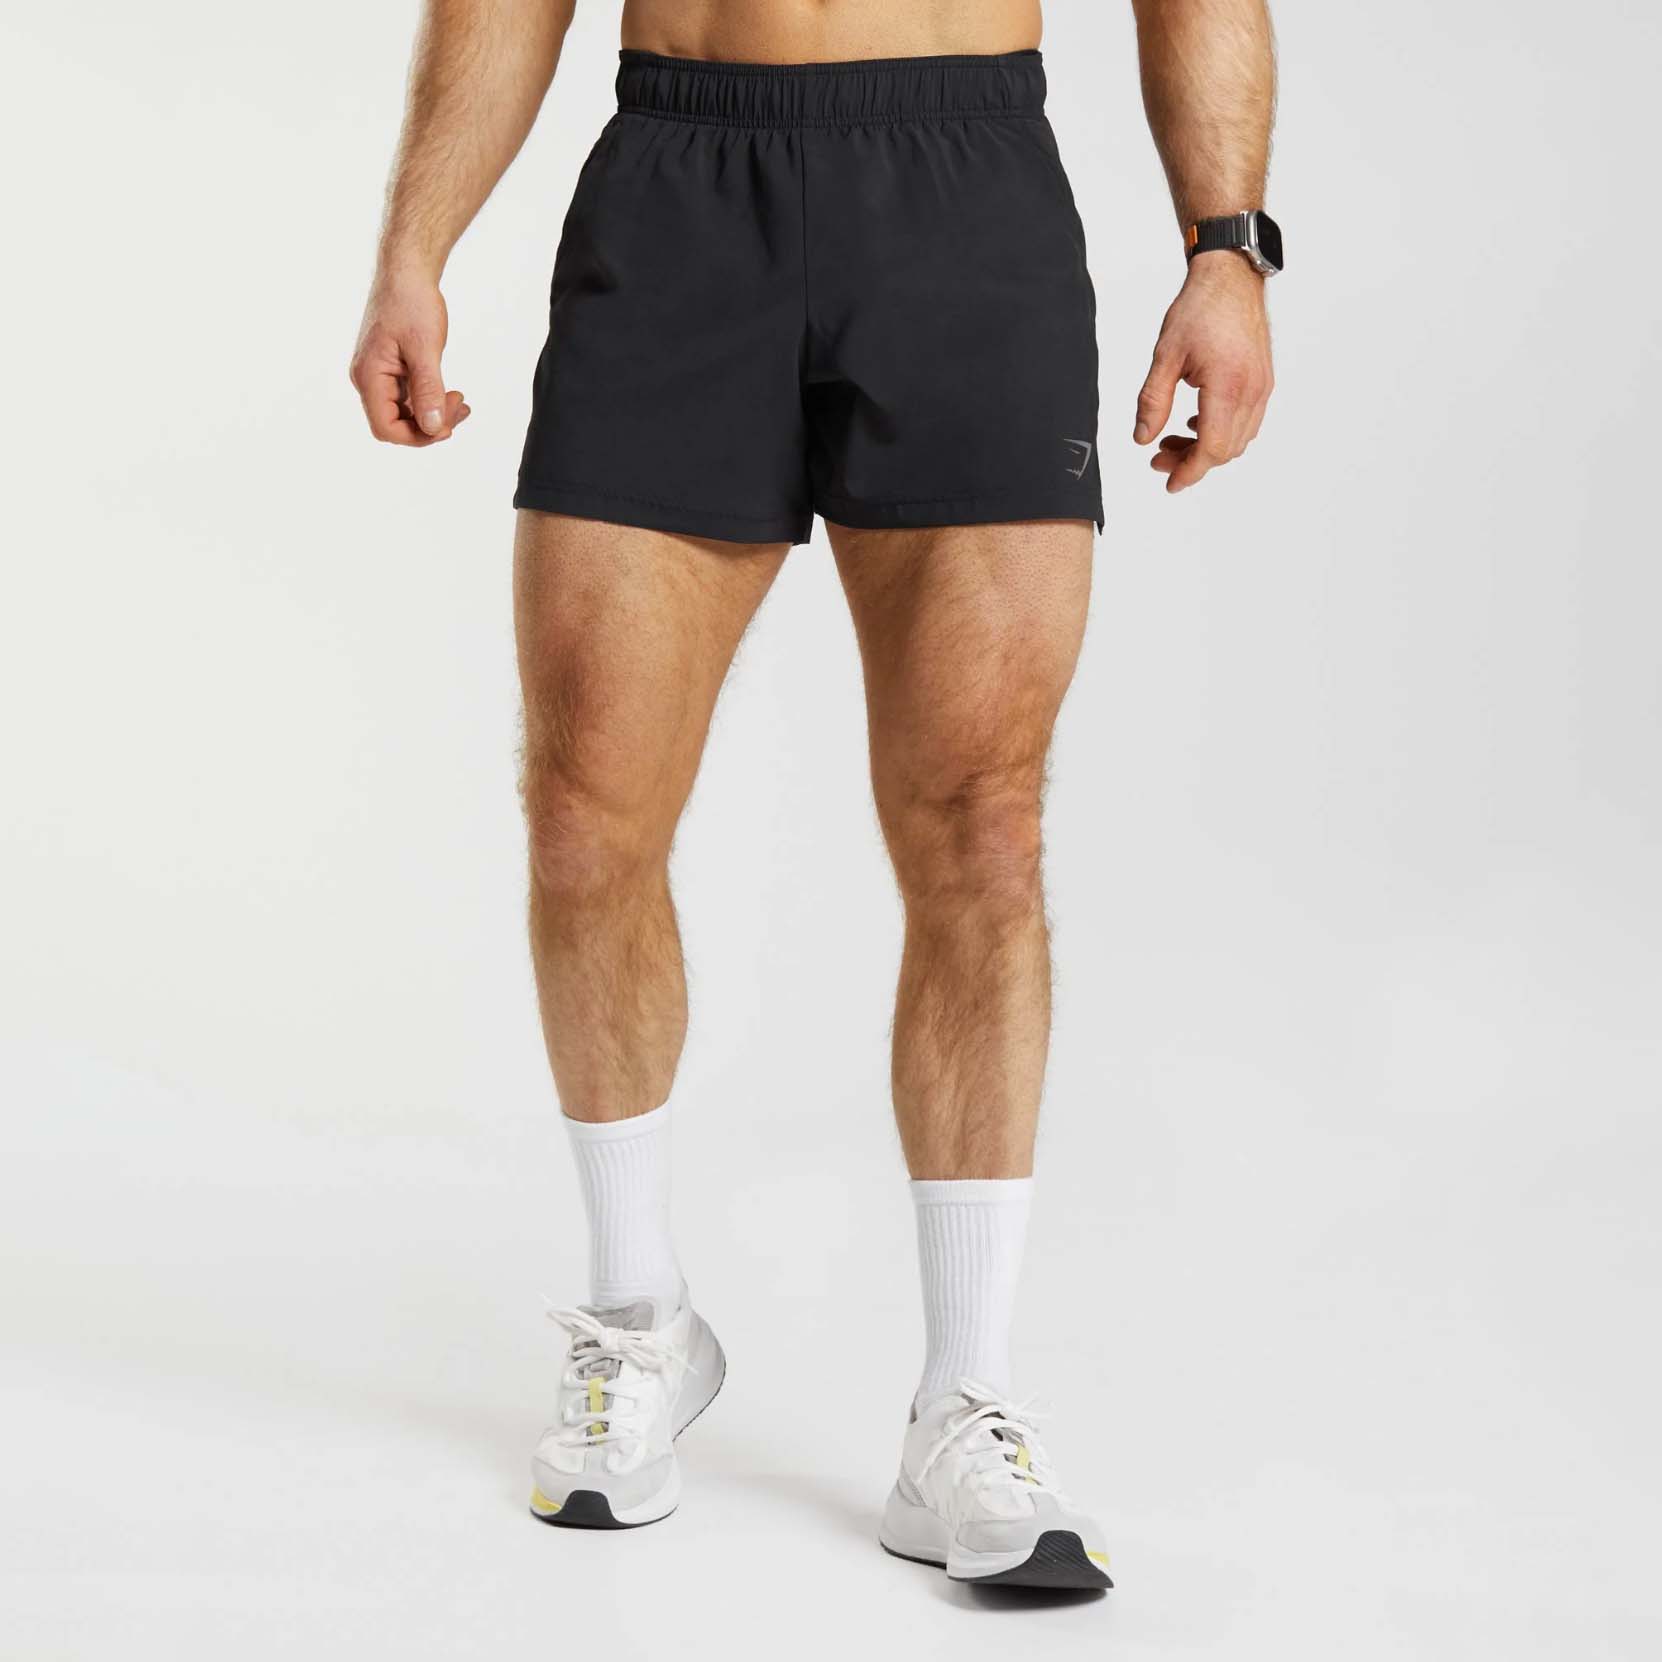 Men in very short black gym shorts